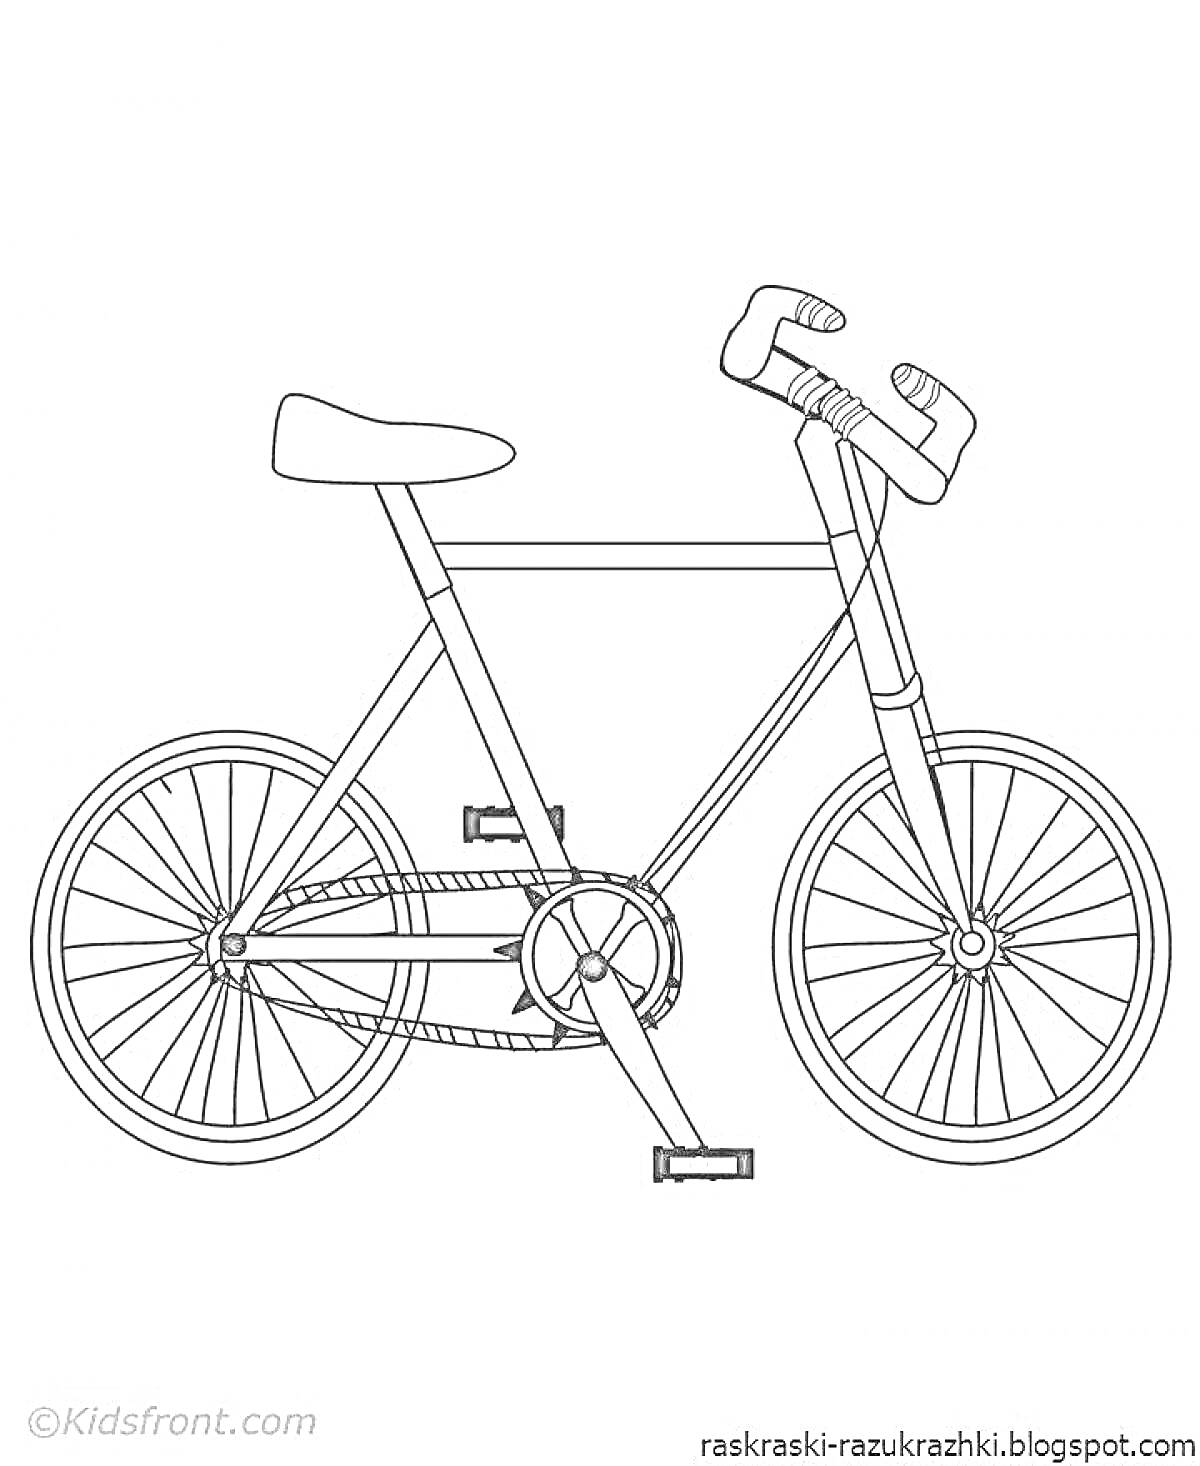 На раскраске изображено: Велосипед, Педали, Колёса, Седло, Рама, Цепь